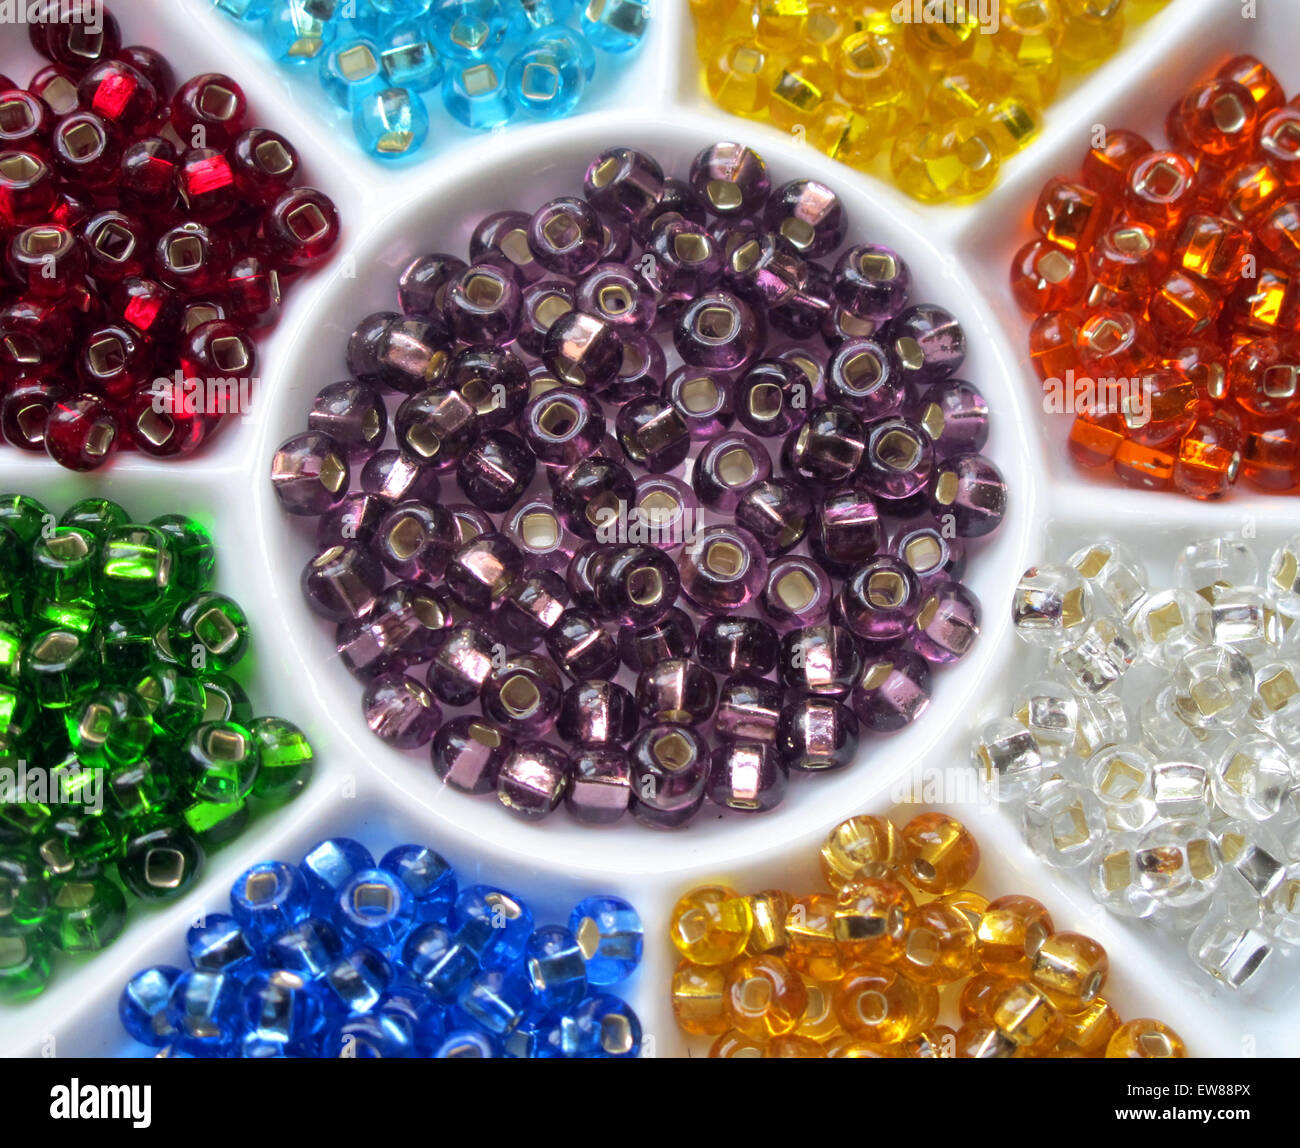 https://c8.alamy.com/comp/EW88PX/colorful-glass-beads-in-a-ceramic-bead-sorter-EW88PX.jpg